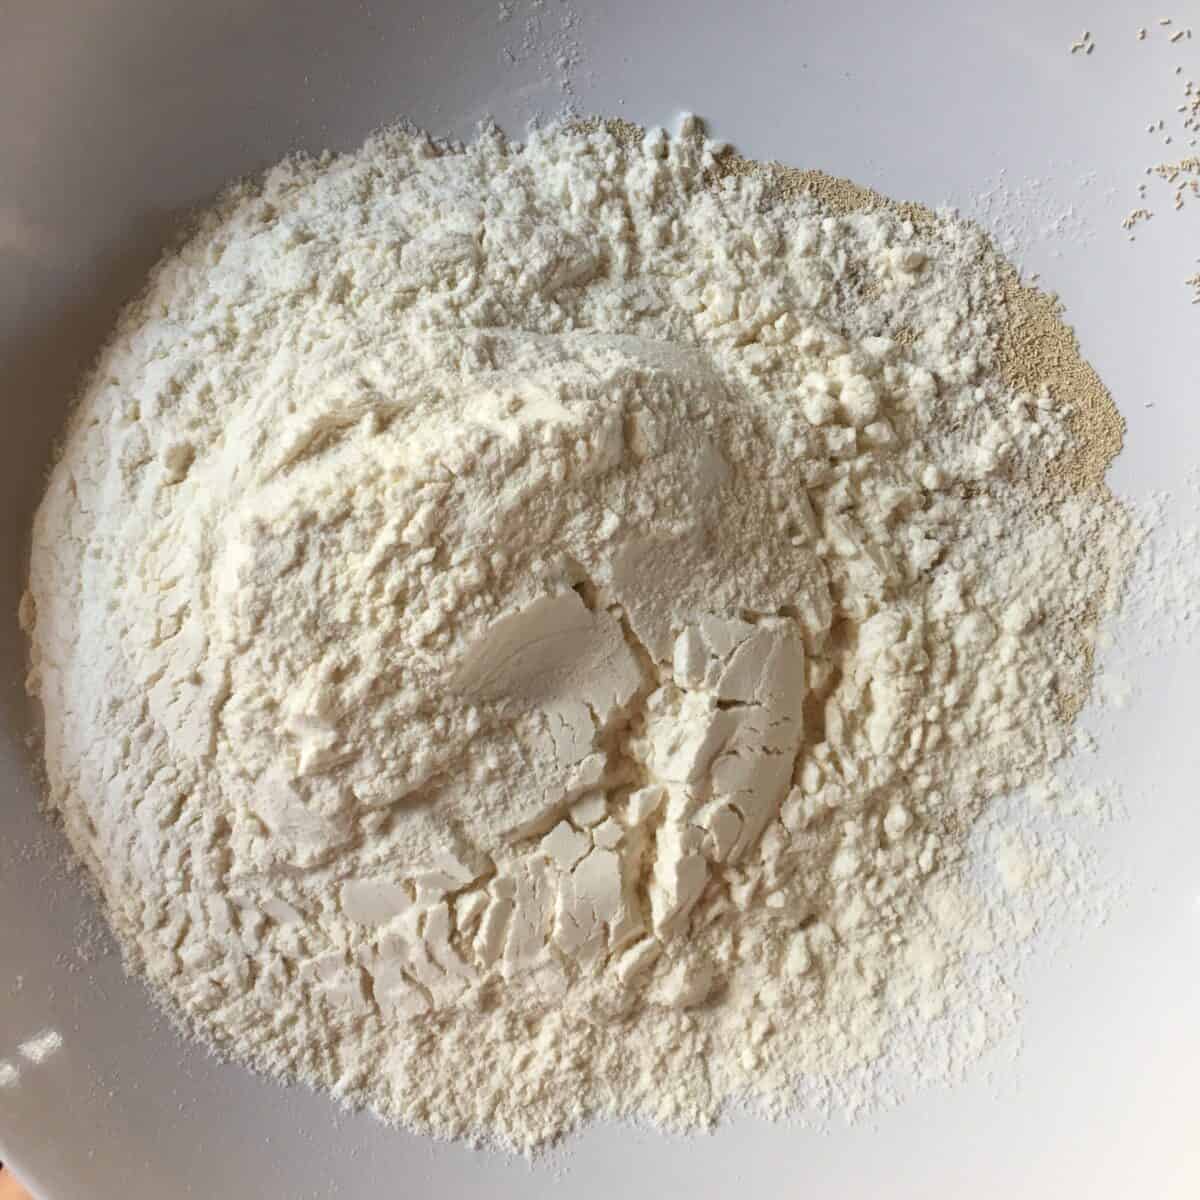 00 flour in a vintage bread bowl